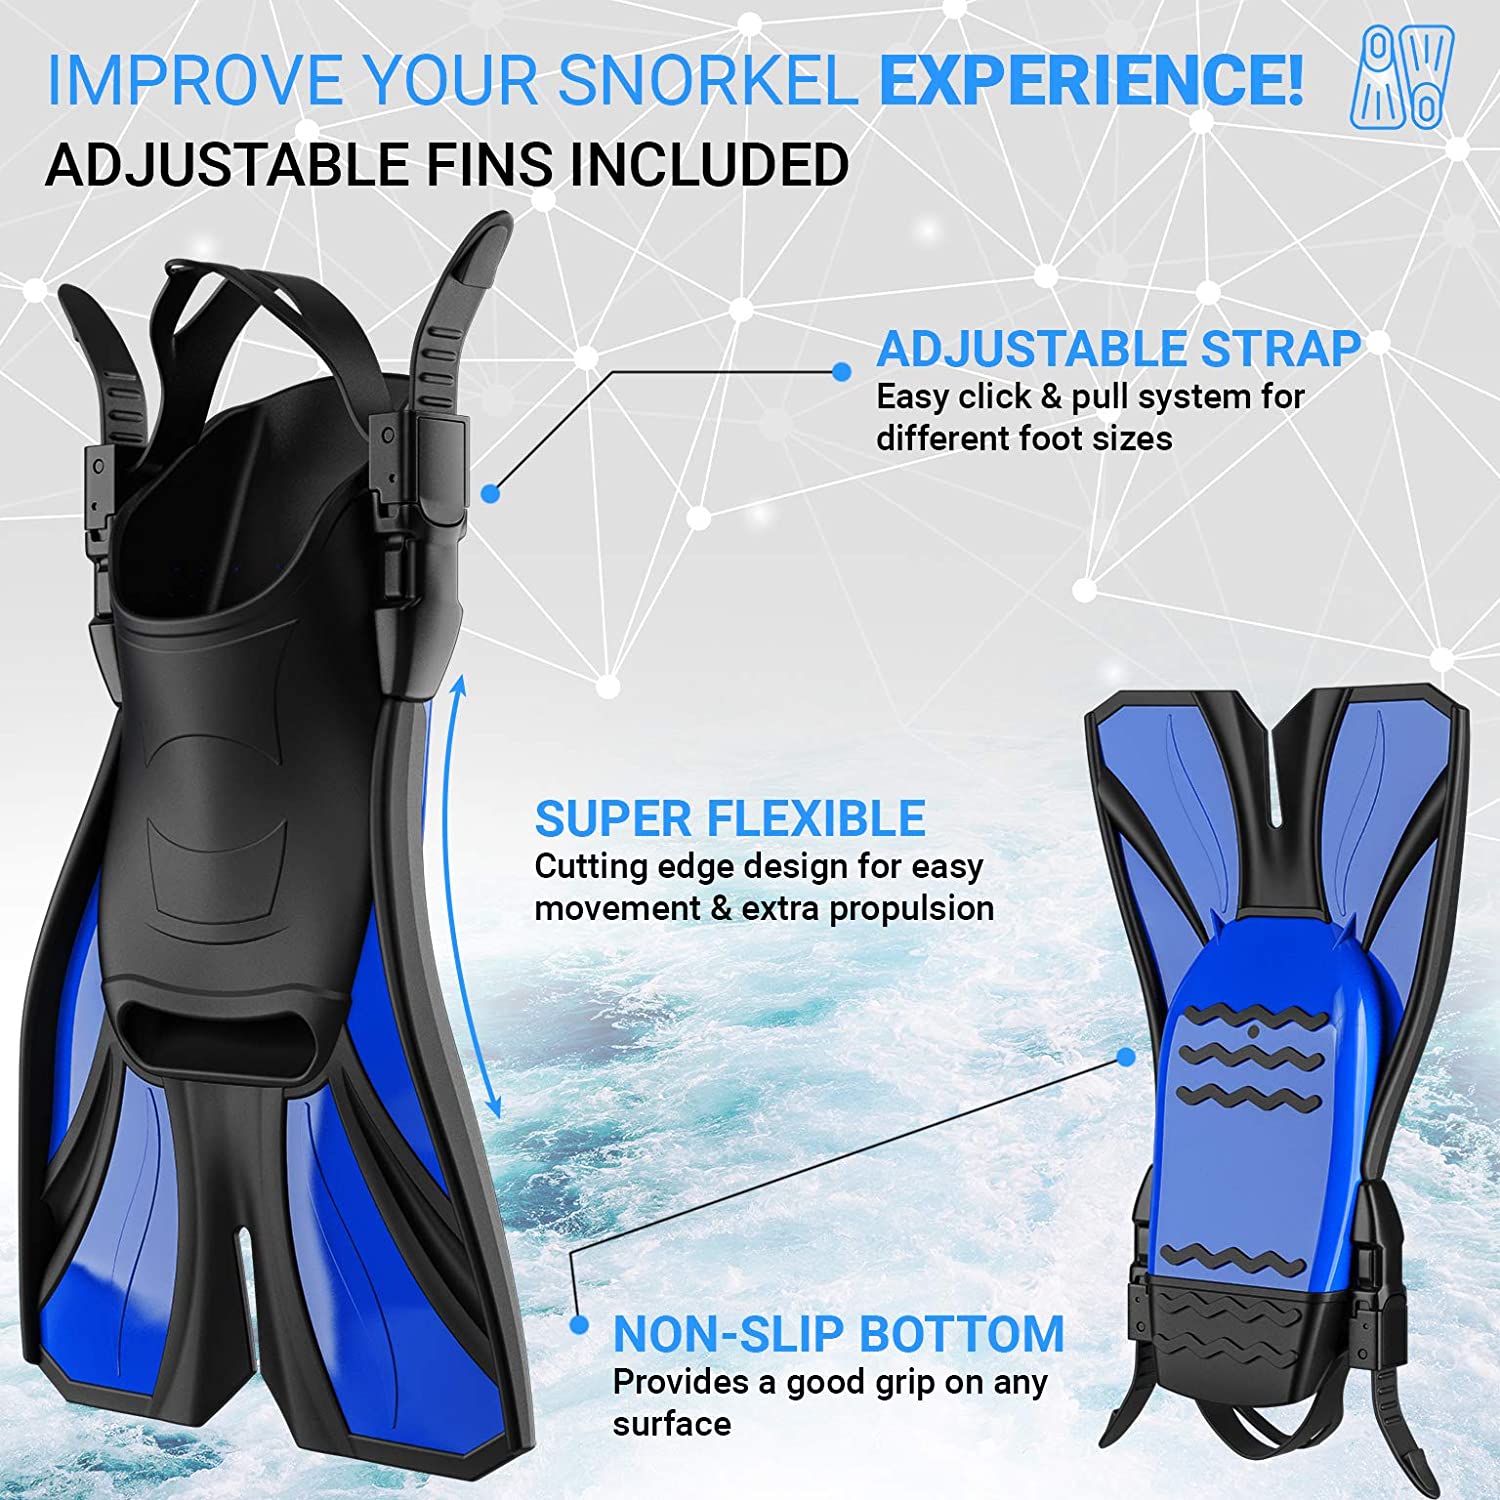 Snorkel Set Adult (Aqua) - Full Face Mask and Adjustable Swim Fins, 180° Panoramic View, Anti Fog and Anti Leak